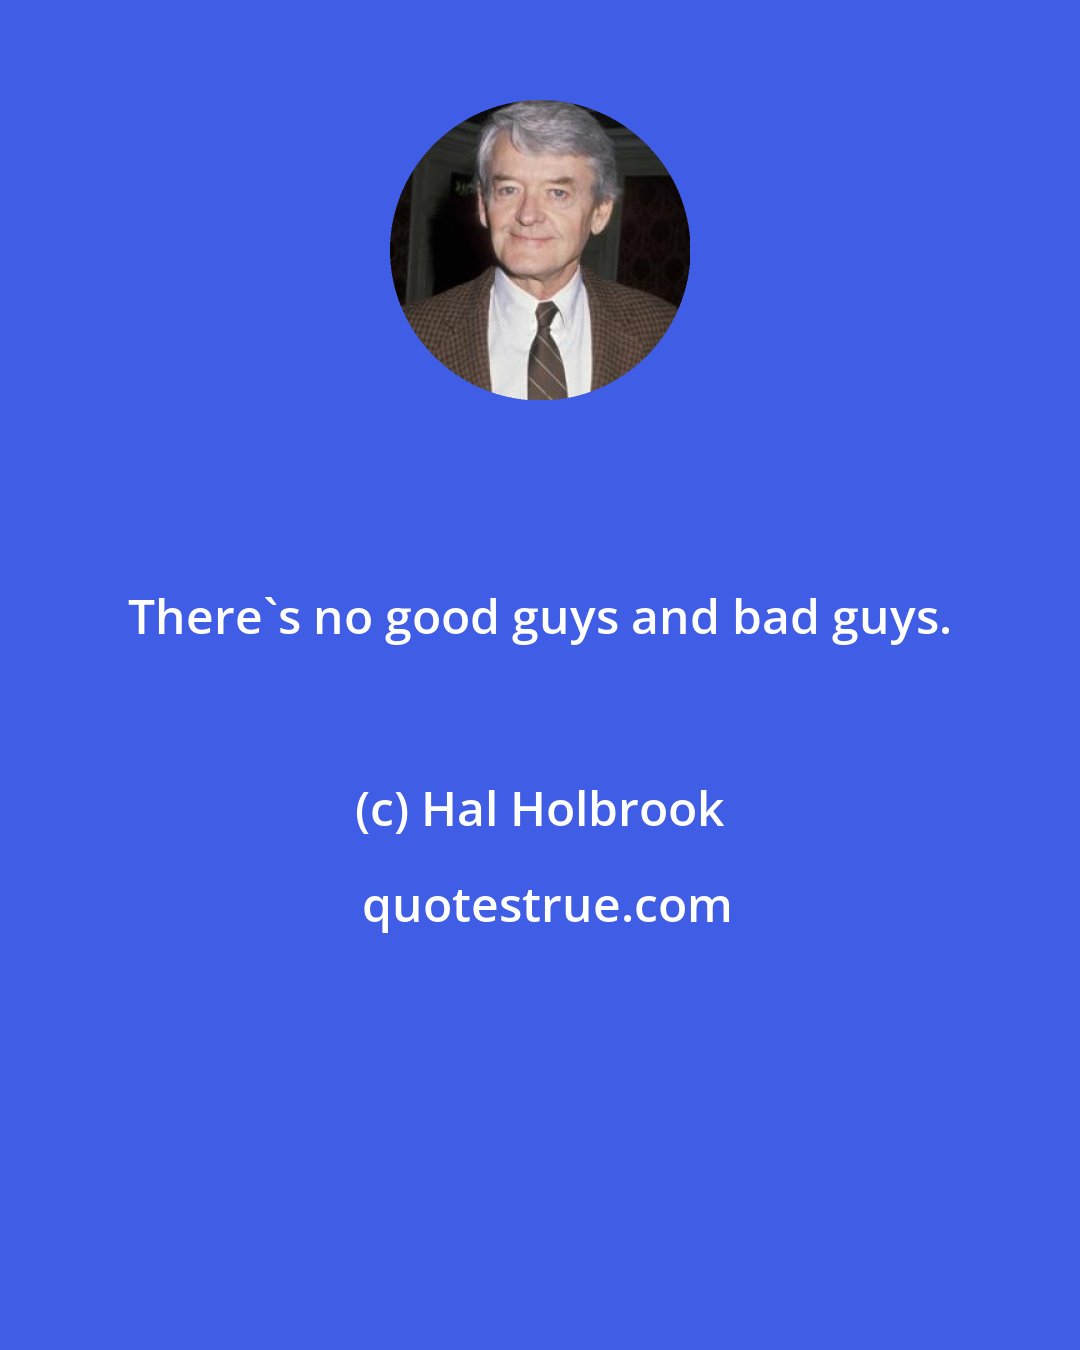 Hal Holbrook: There's no good guys and bad guys.